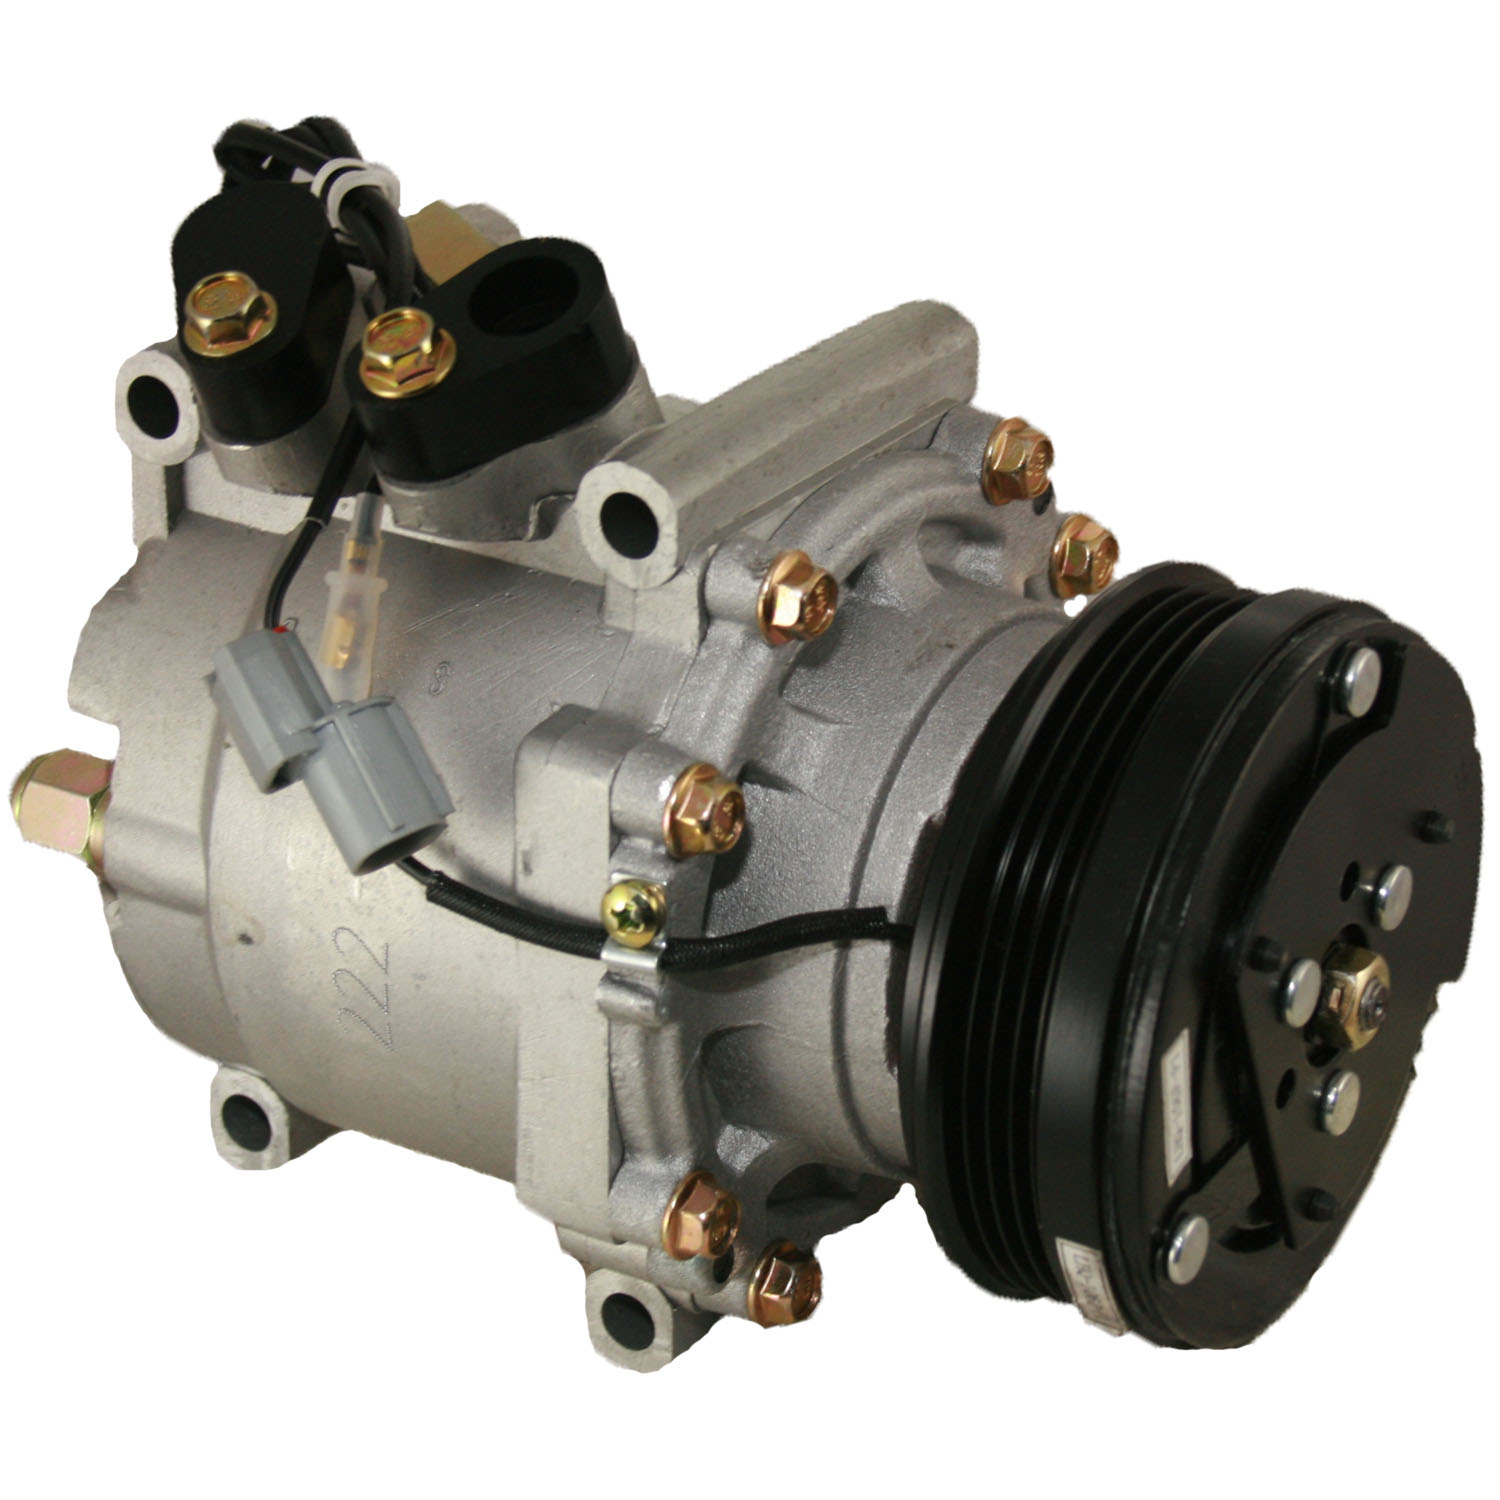 TCW Compressor 40860.401NEW New Product Image field_60b6a13a6e67c